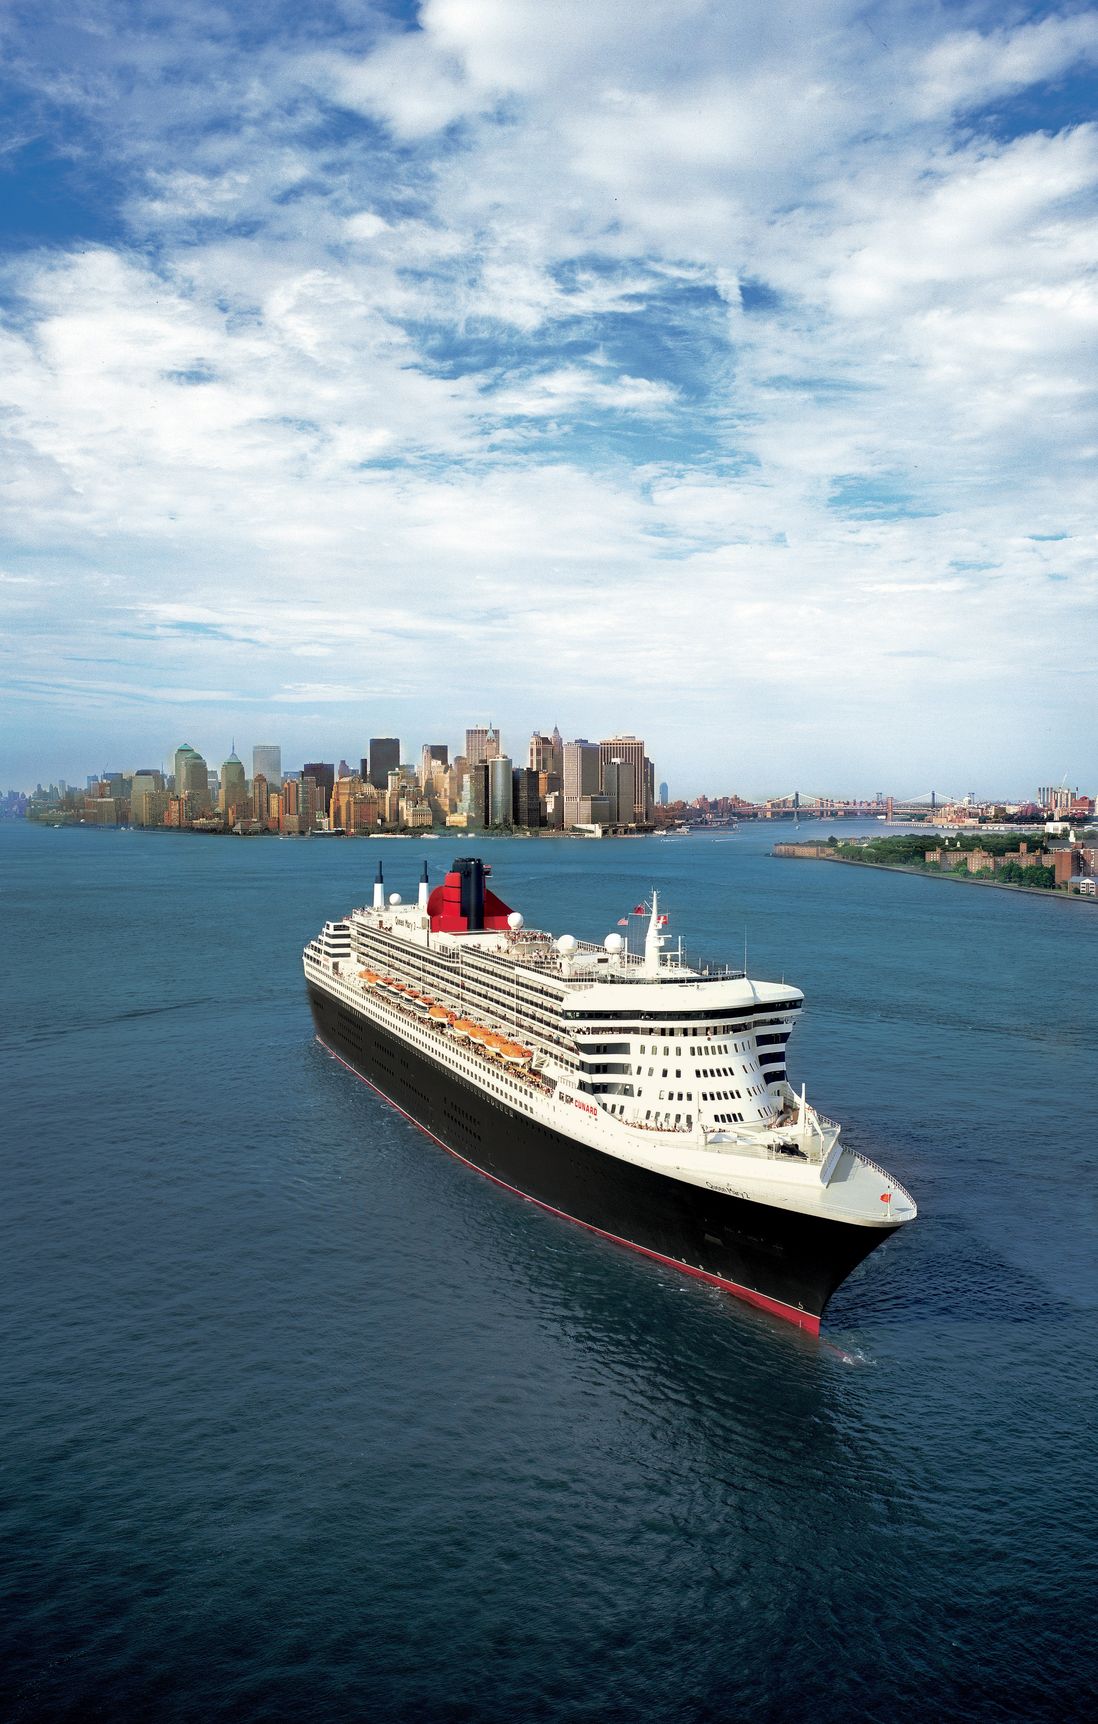 The Cunard Queen Mary